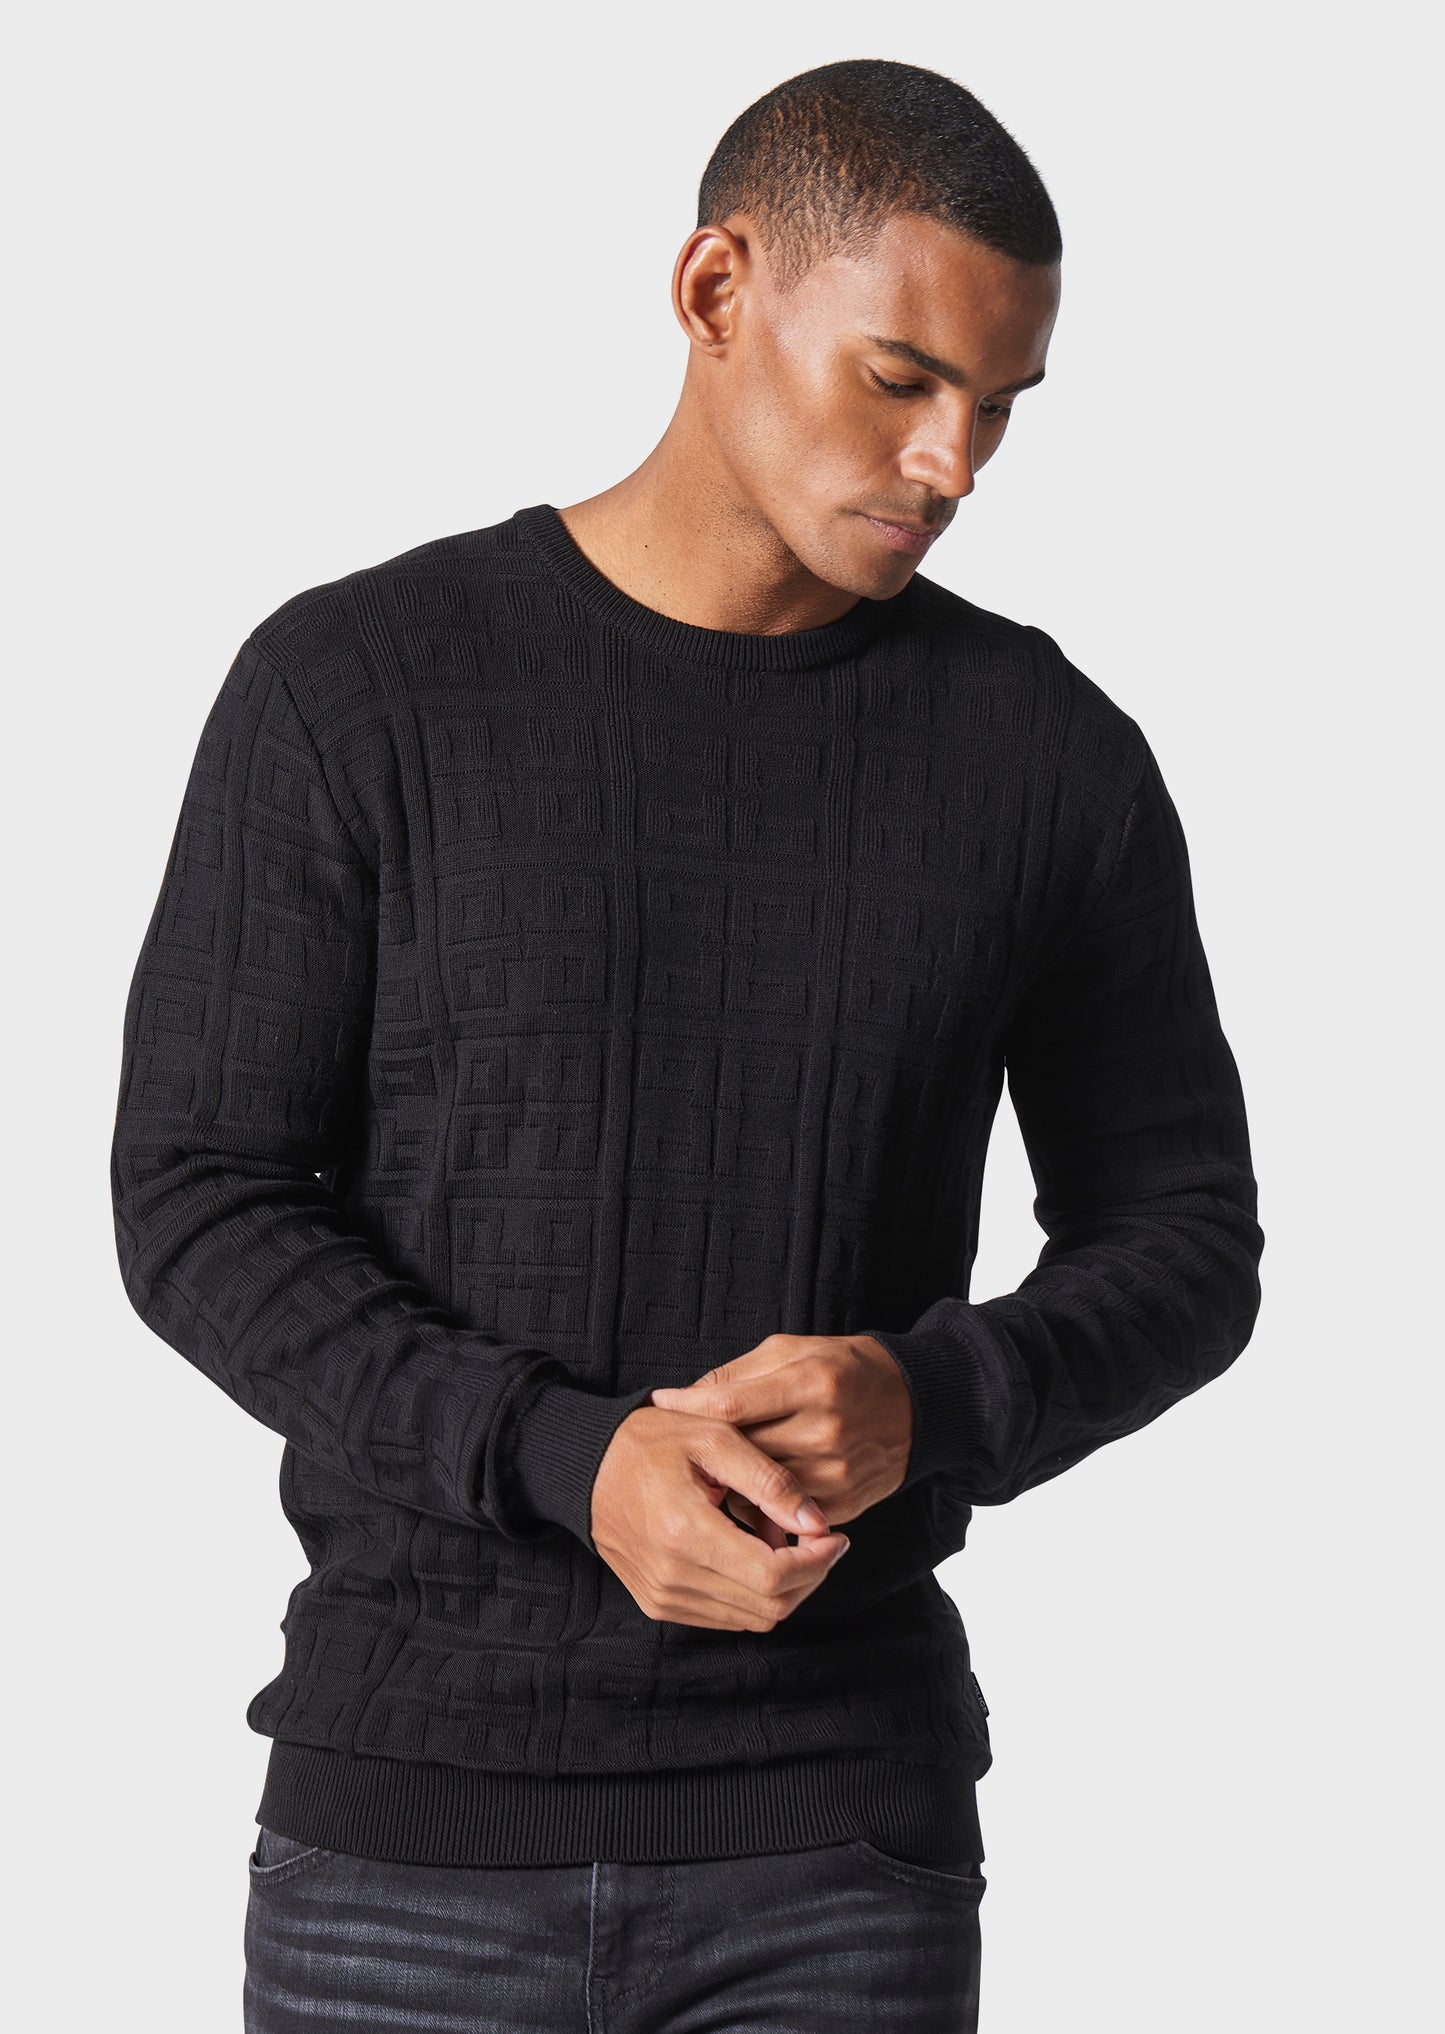 Divisa Black Knitted Sweatshirt